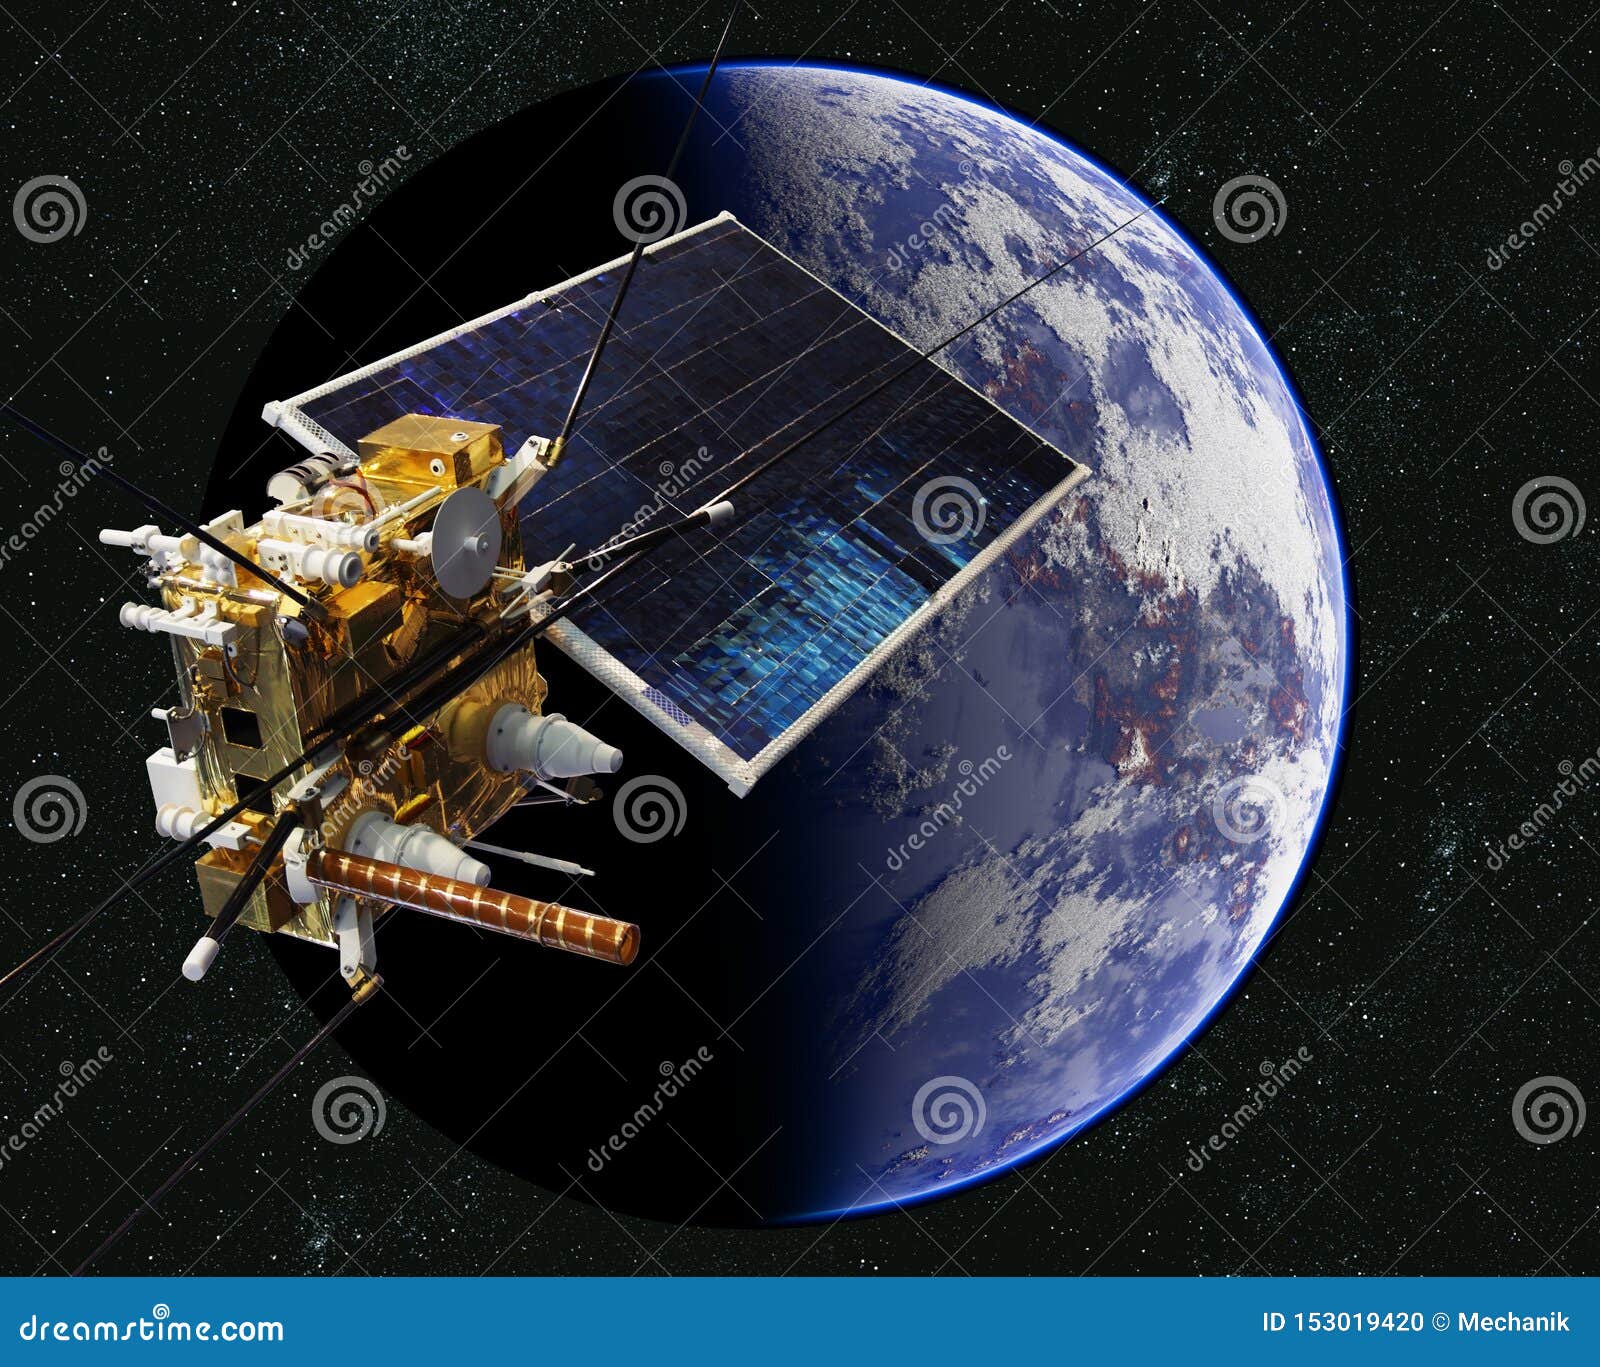 modern weather scientific satellite at the earth orbit